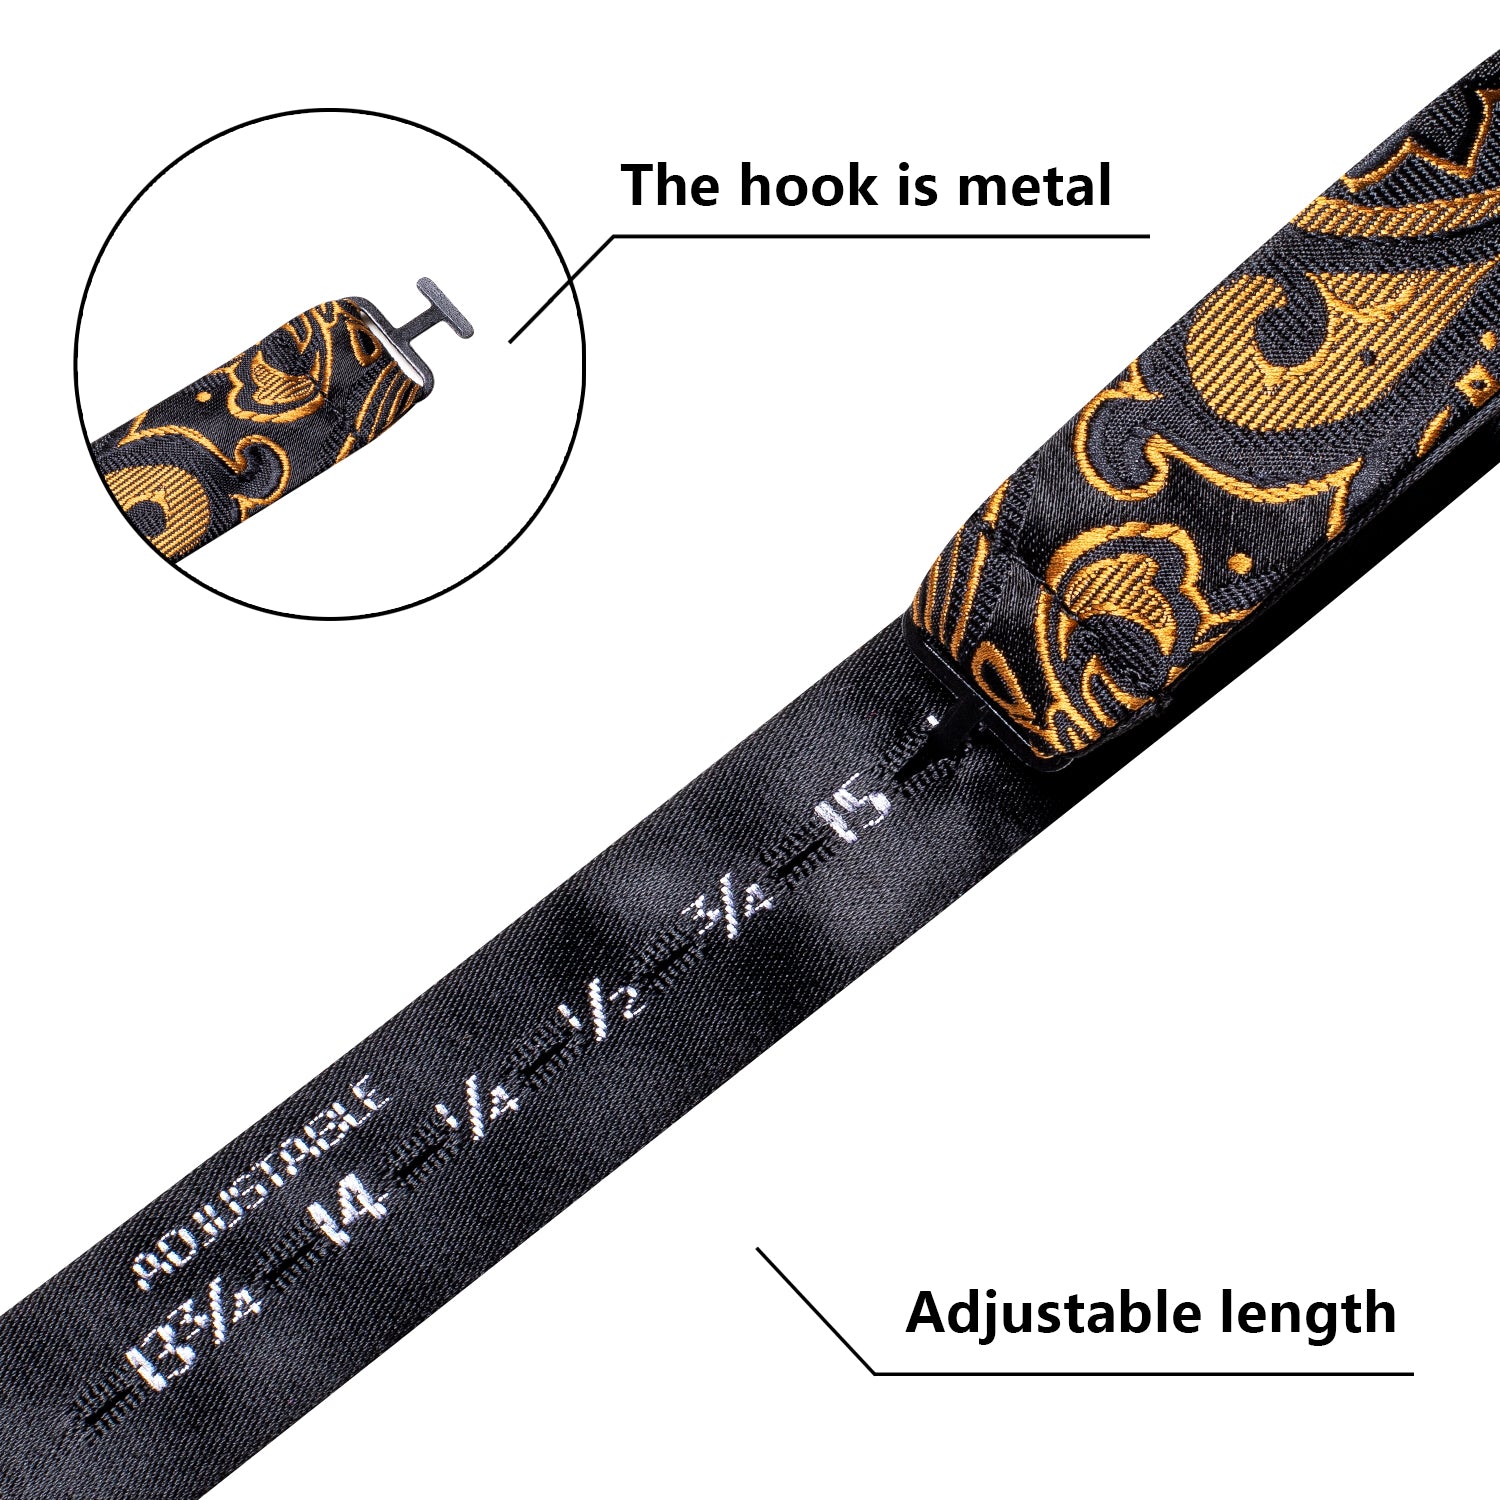 New Golden Black Paisley Silk Self-tied Bow Tie Pocket Square Cufflinks Set